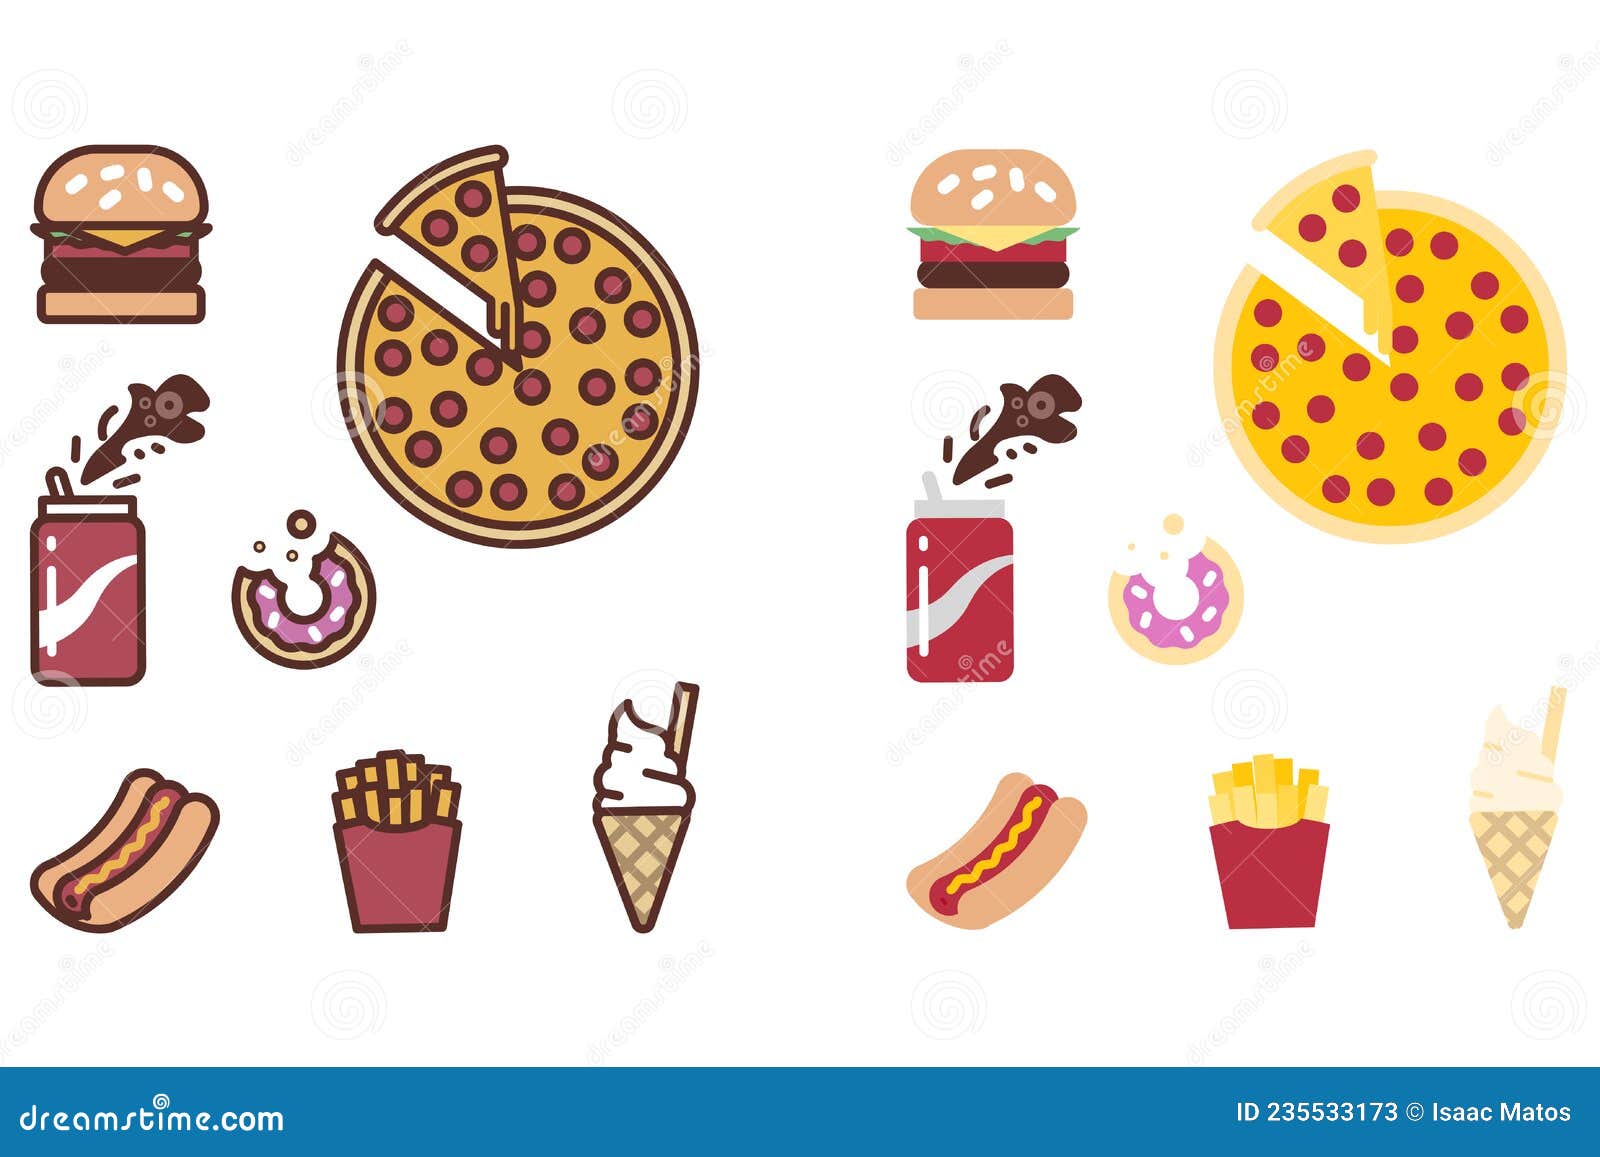 Junk Food. Set of Colorful Fast Food Icons. Hamburger, Pizza, Soda ...